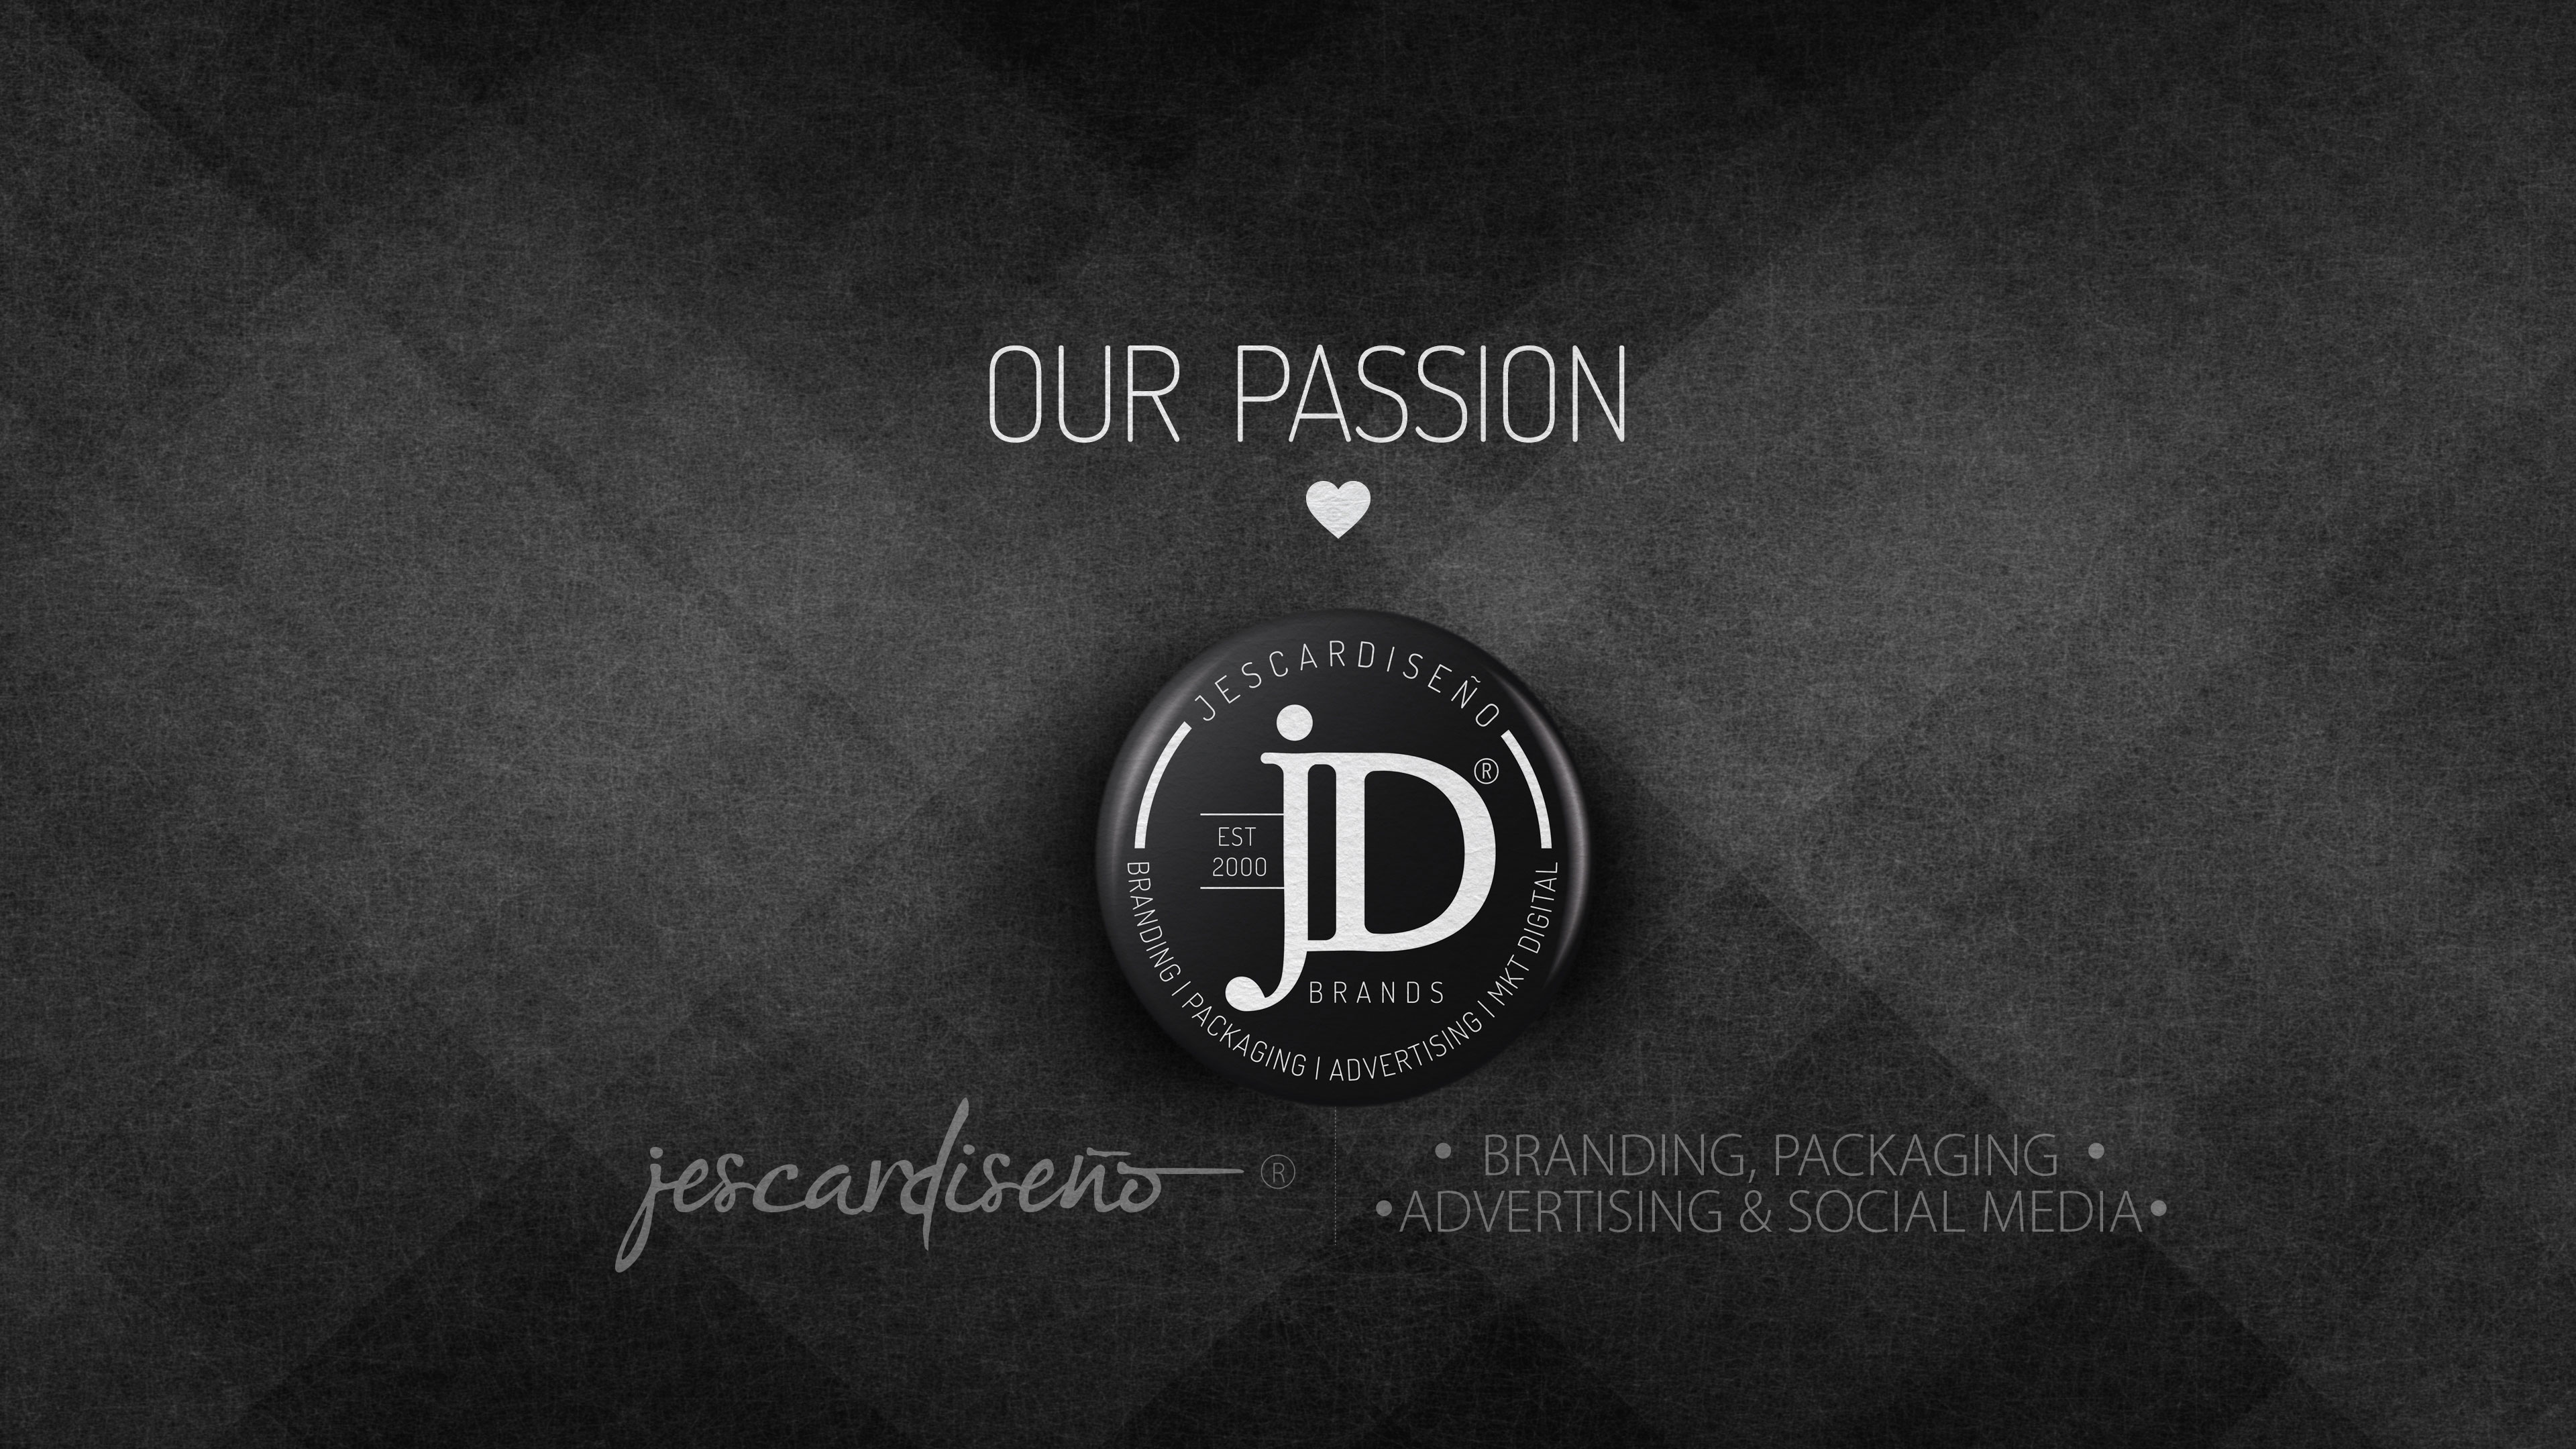 1jdbrands ourpassion packaging branding jescardiseno portafolio